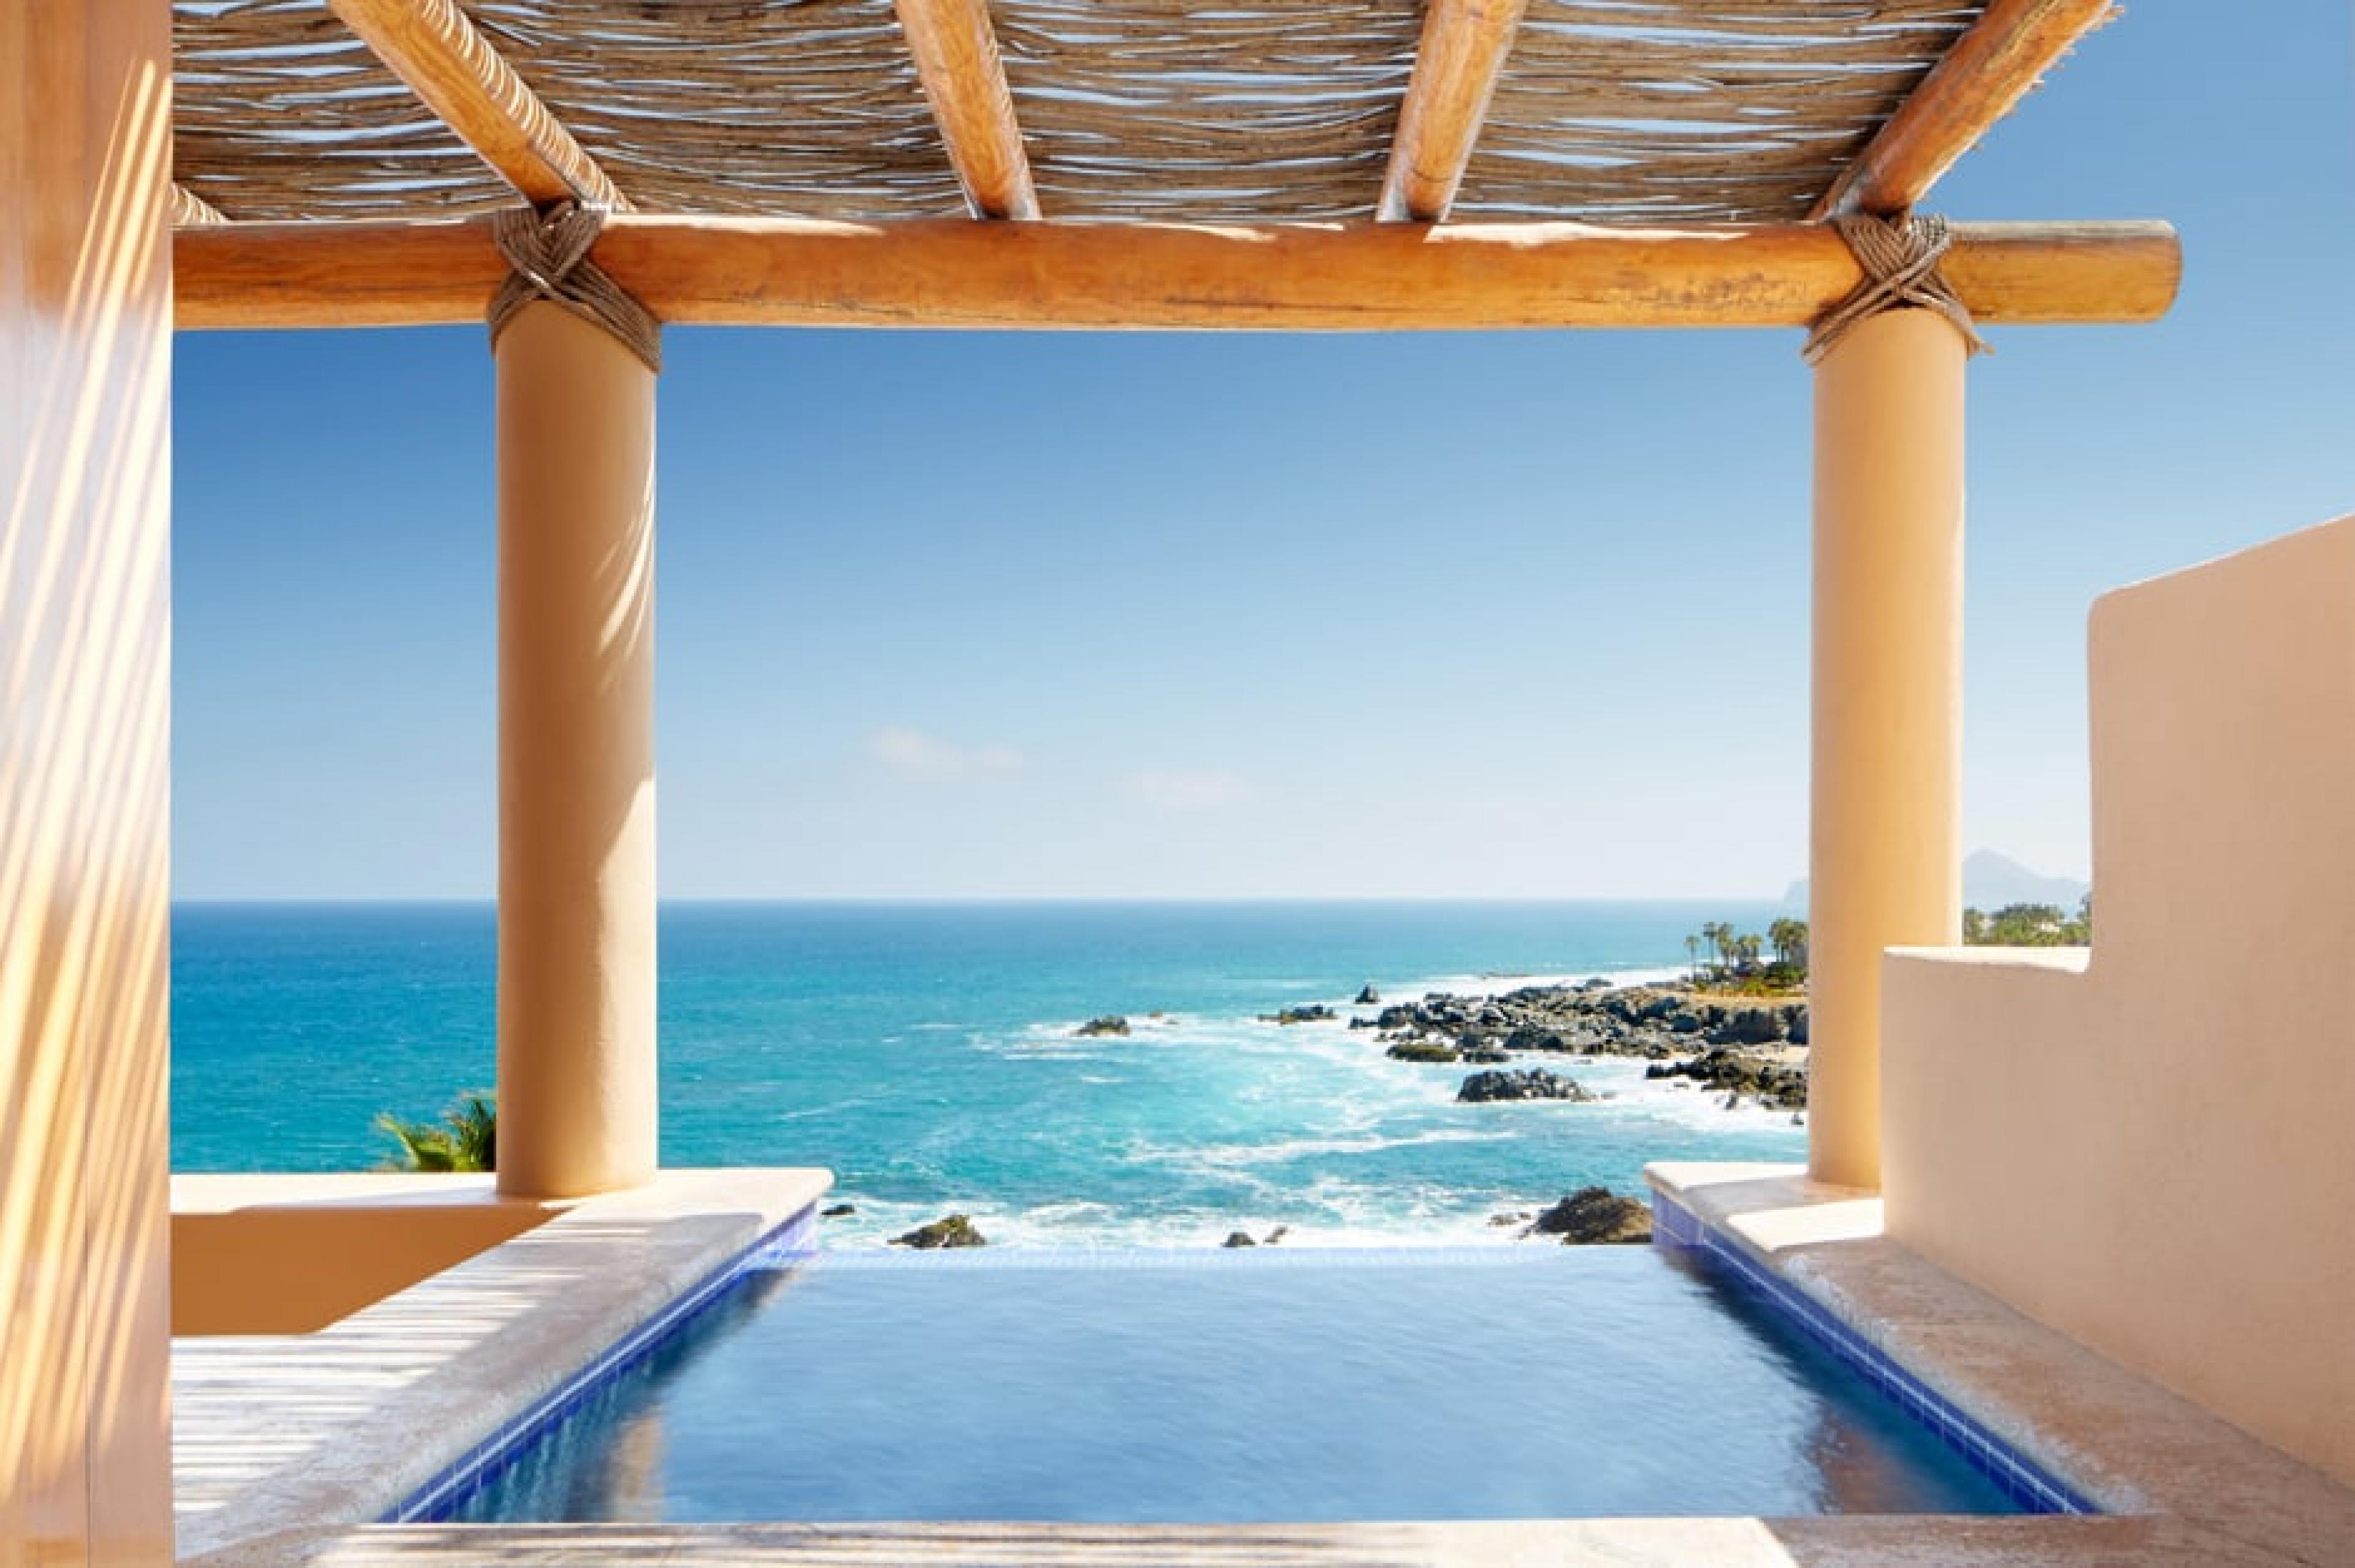 Pool Lounge at Esperanza, Cabos, Mexico

